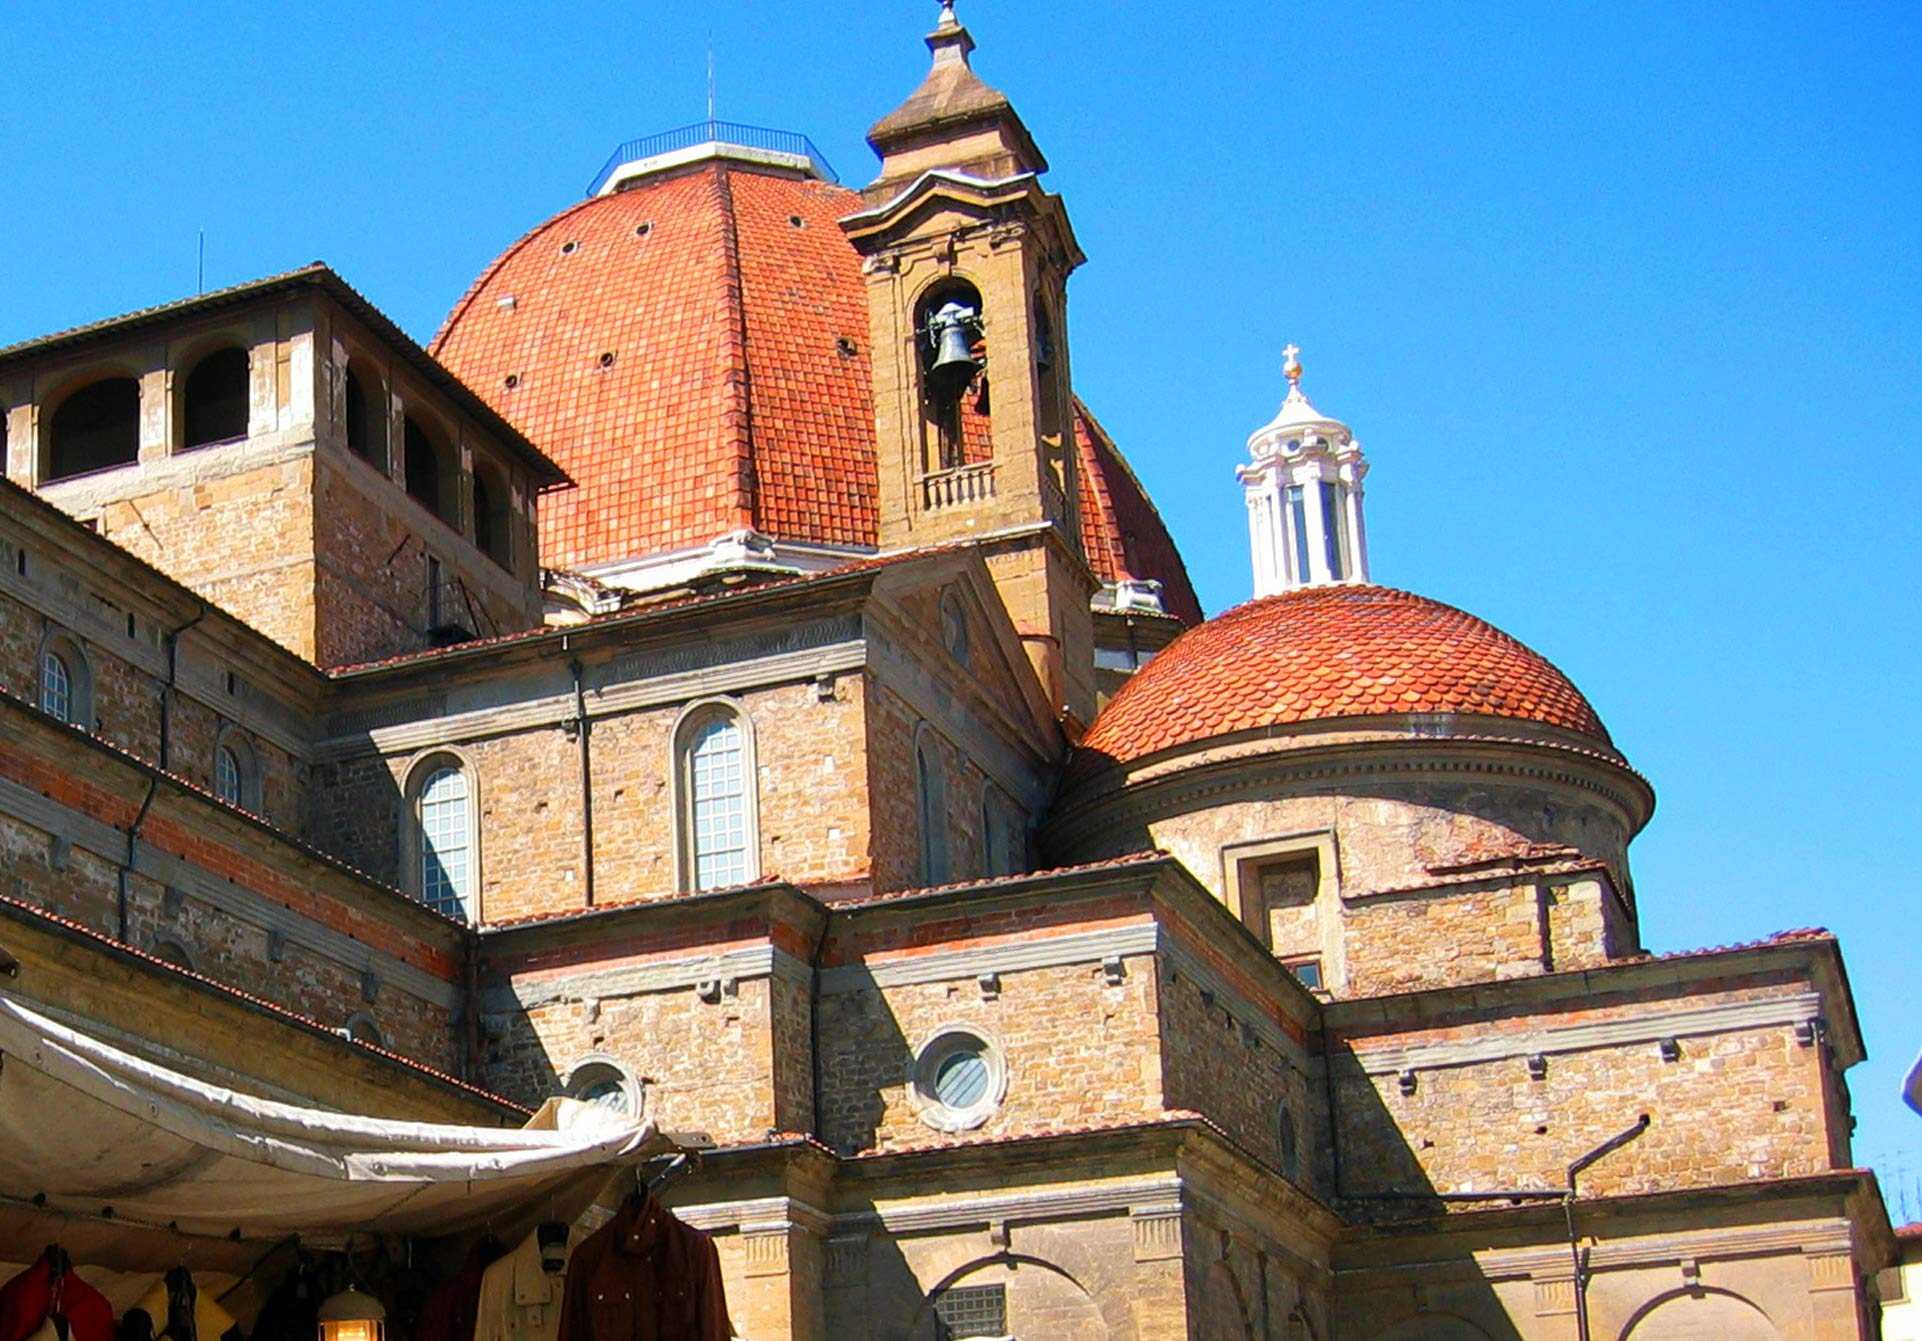 Базилика сан-лоренцо флоренции – одна из старейших церквей в городе